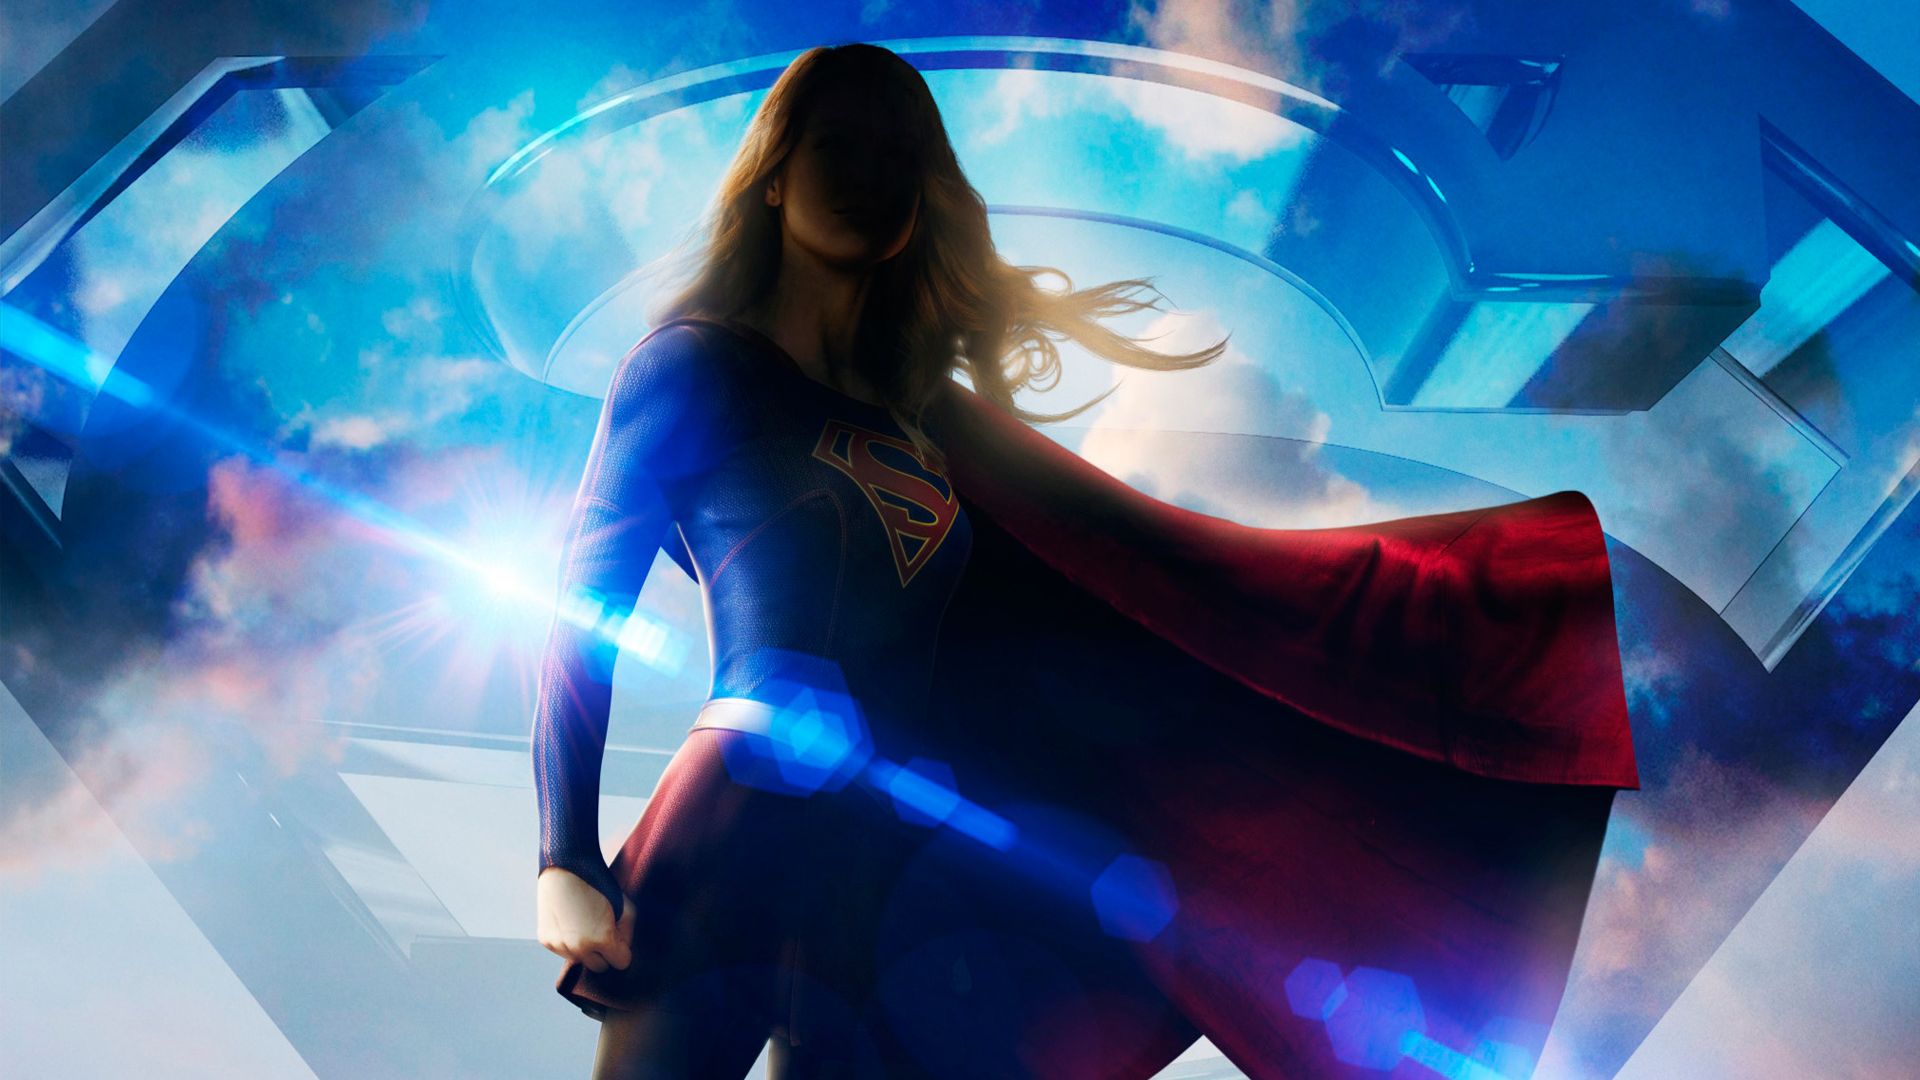 Supergirl Season 3 Poster Wallpapers